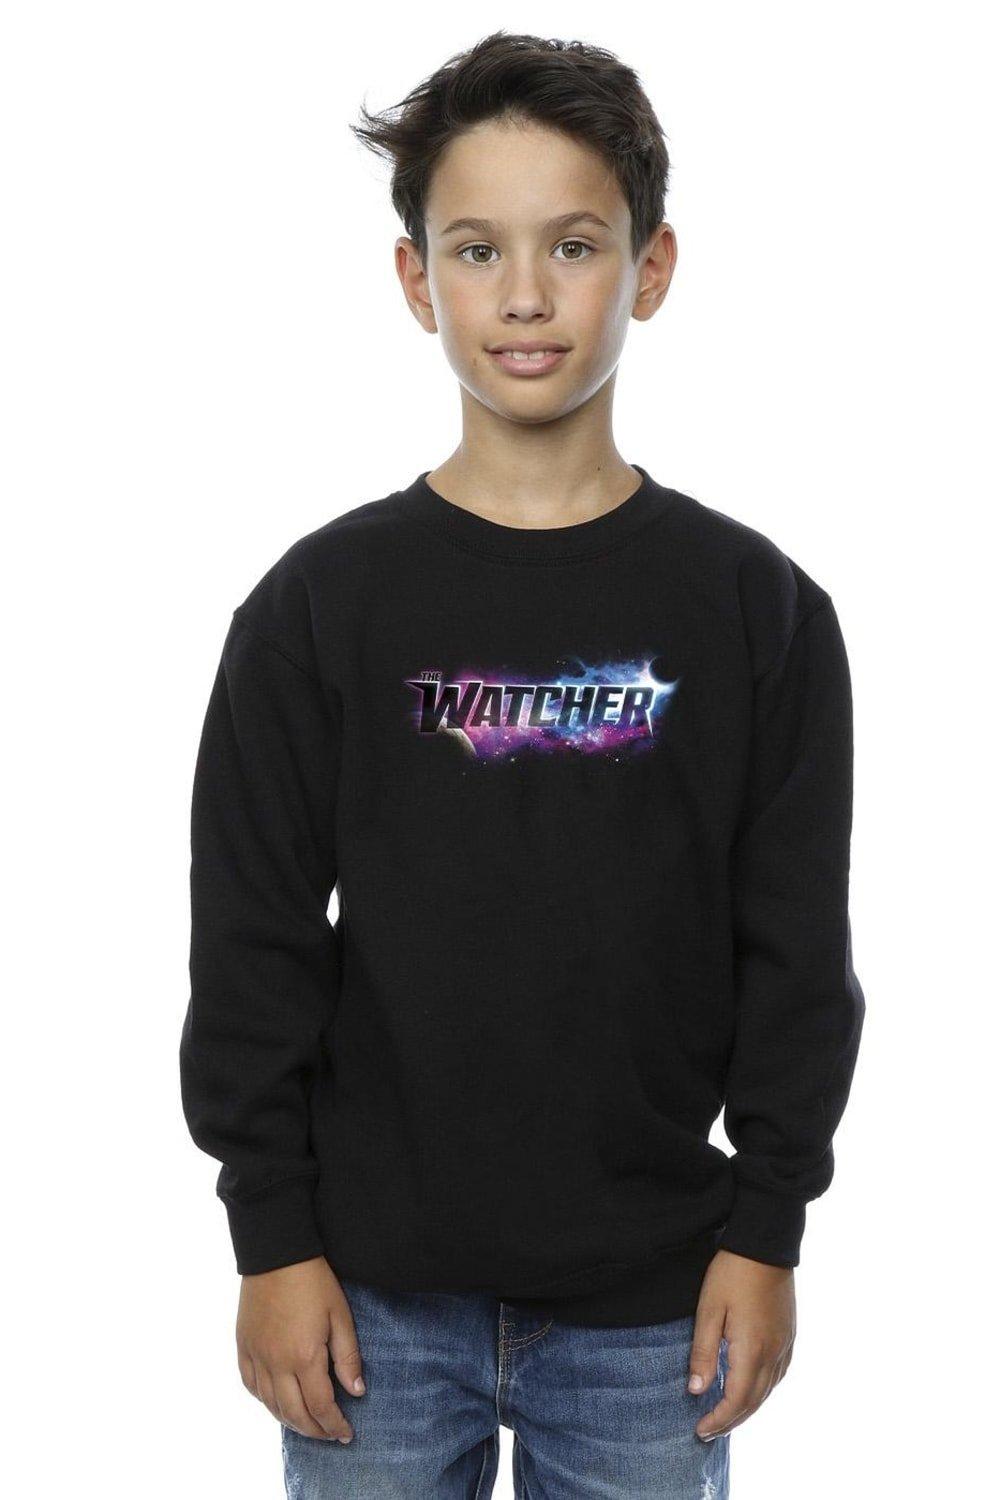 What If Watcher Sweatshirt